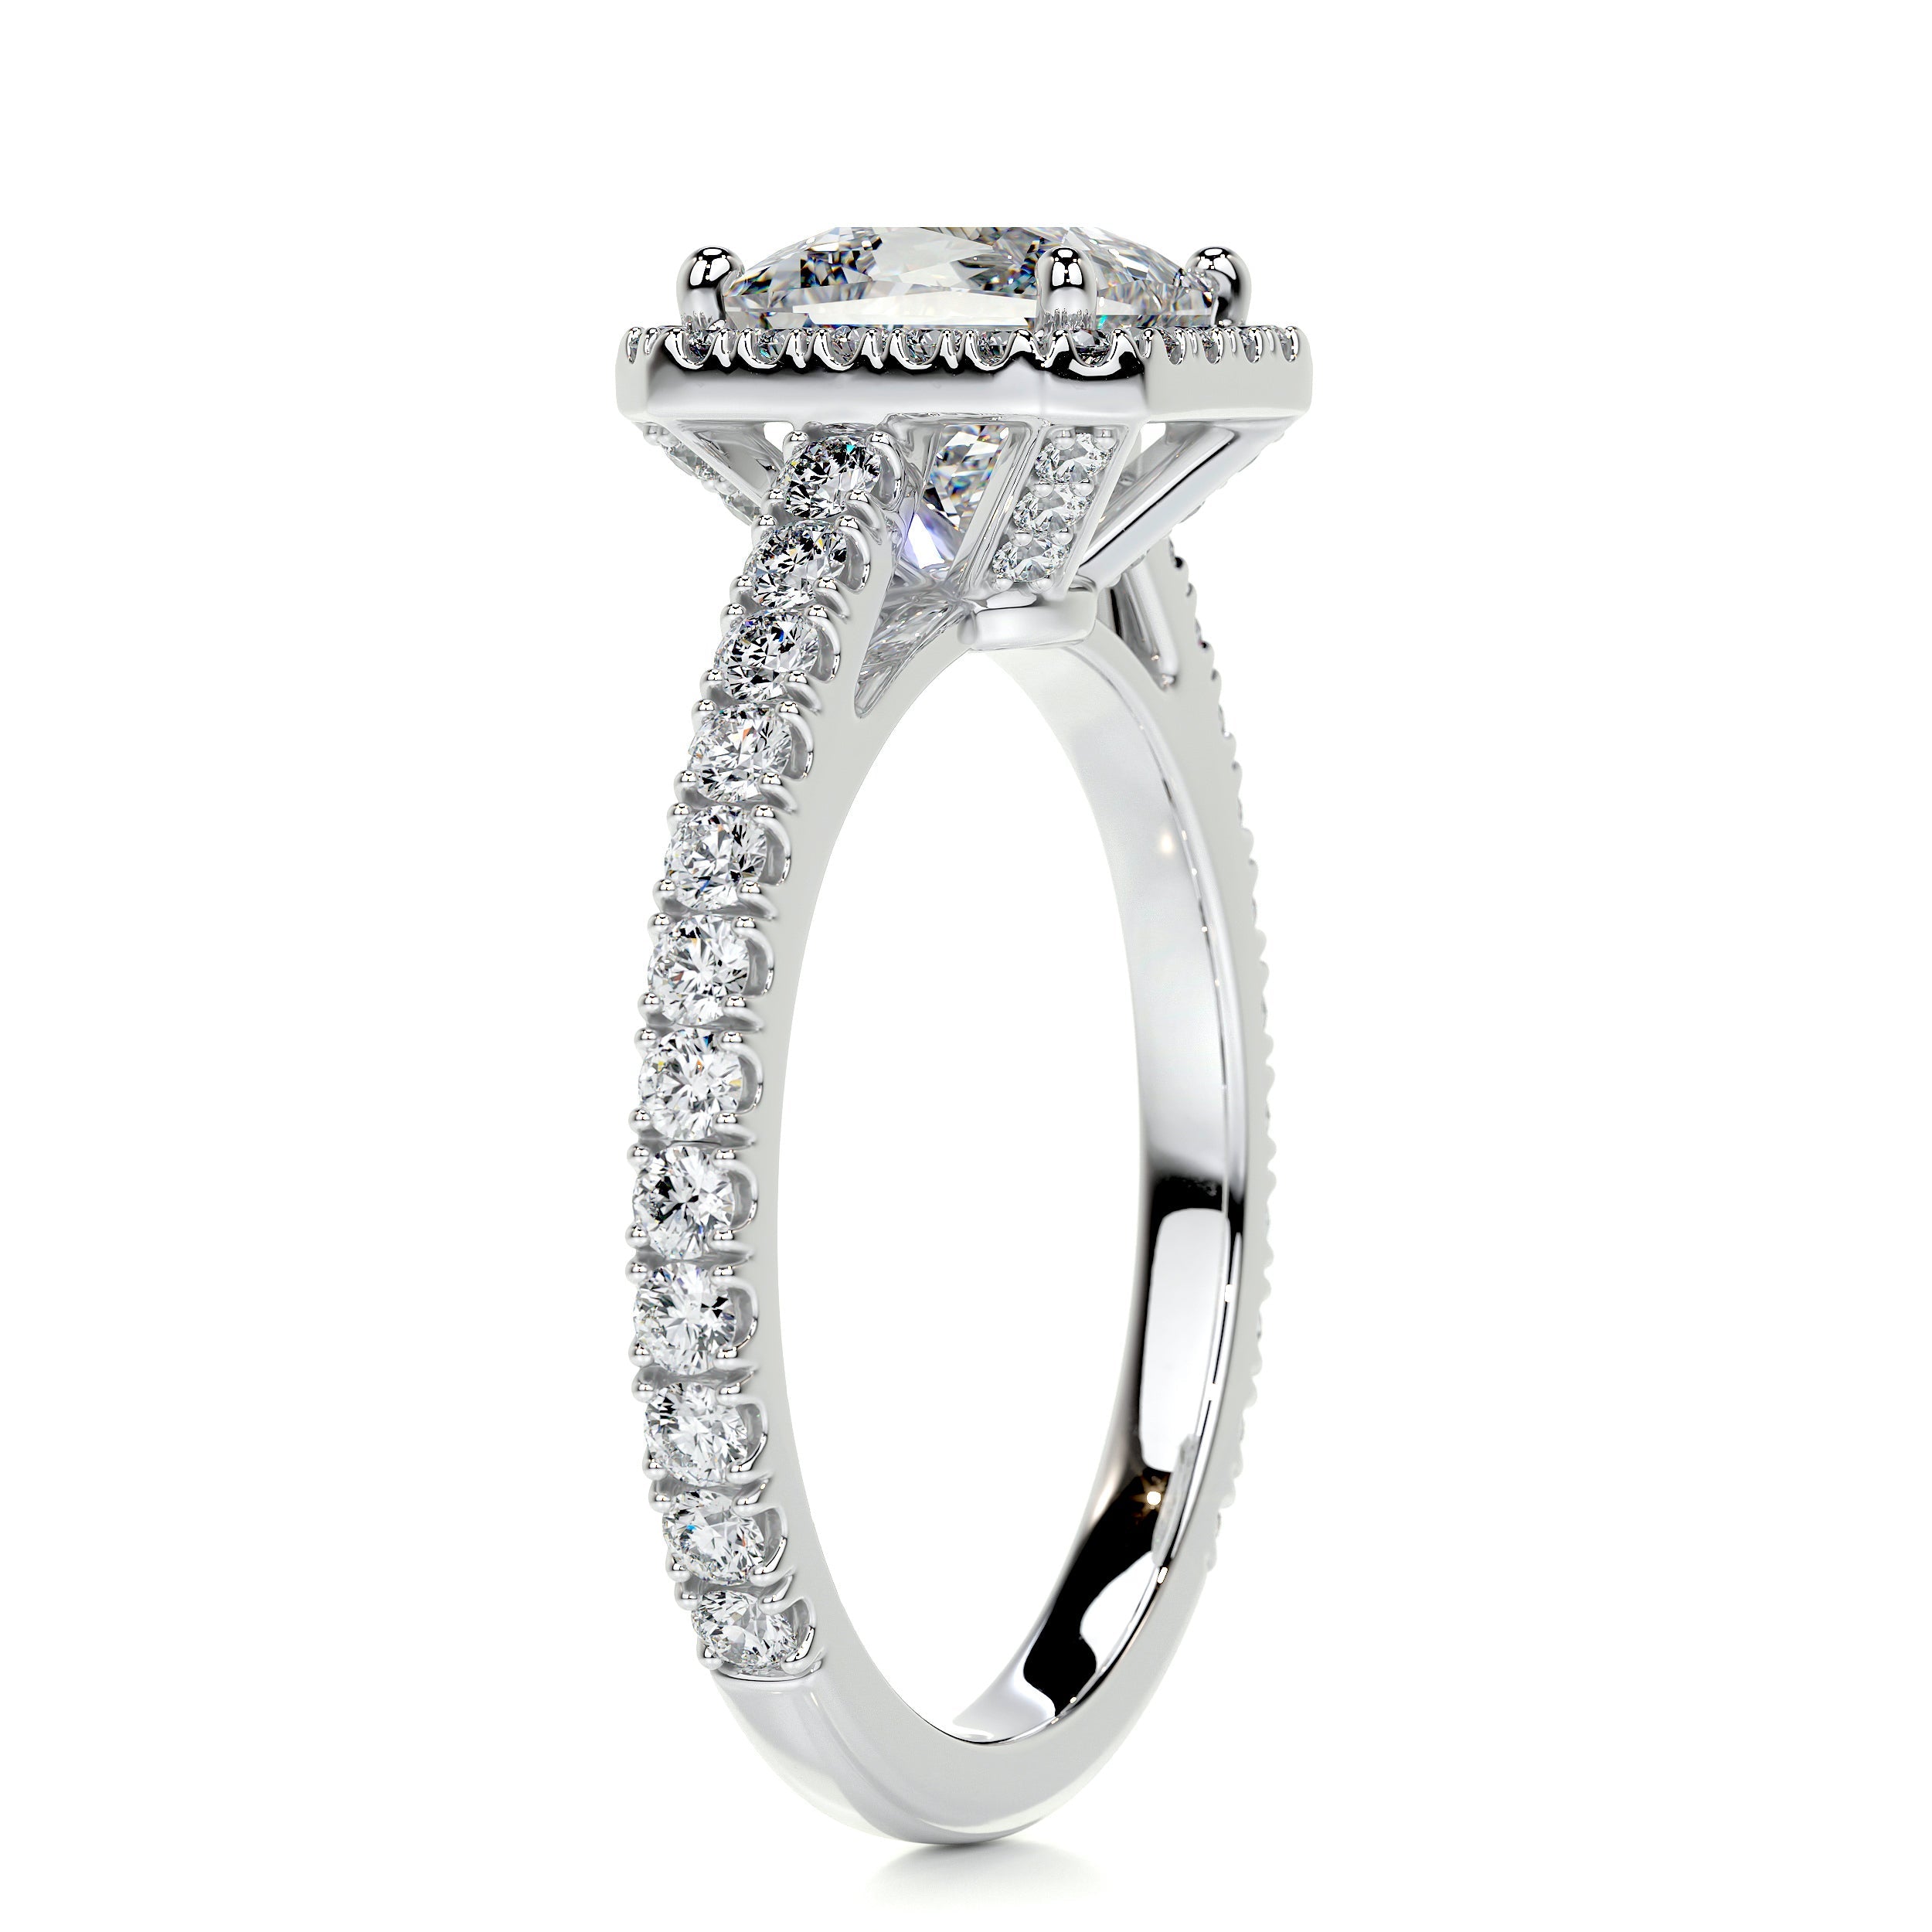 Selena Diamond Engagement Ring   (1.5 Carat) -14K White Gold (RTS)